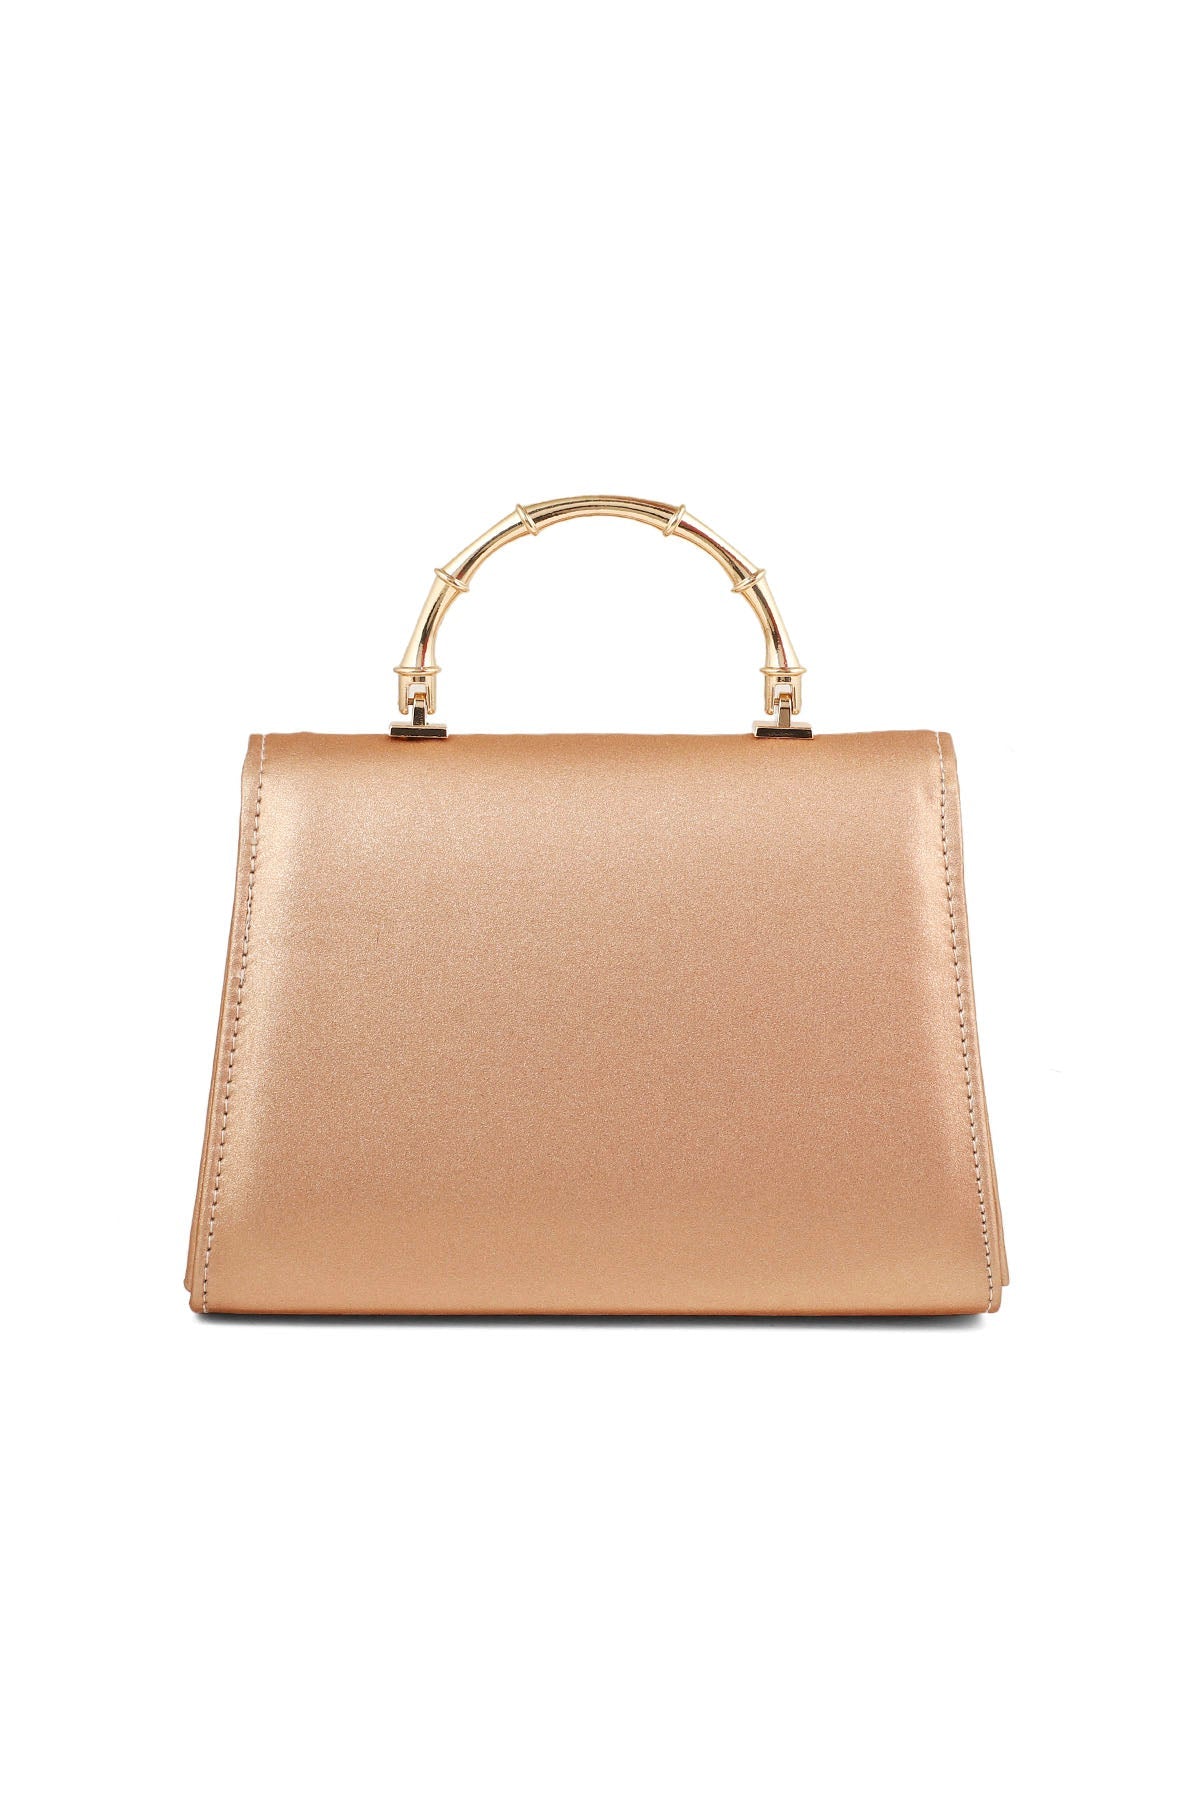 Top Handle Hand Bags B21591-Peach